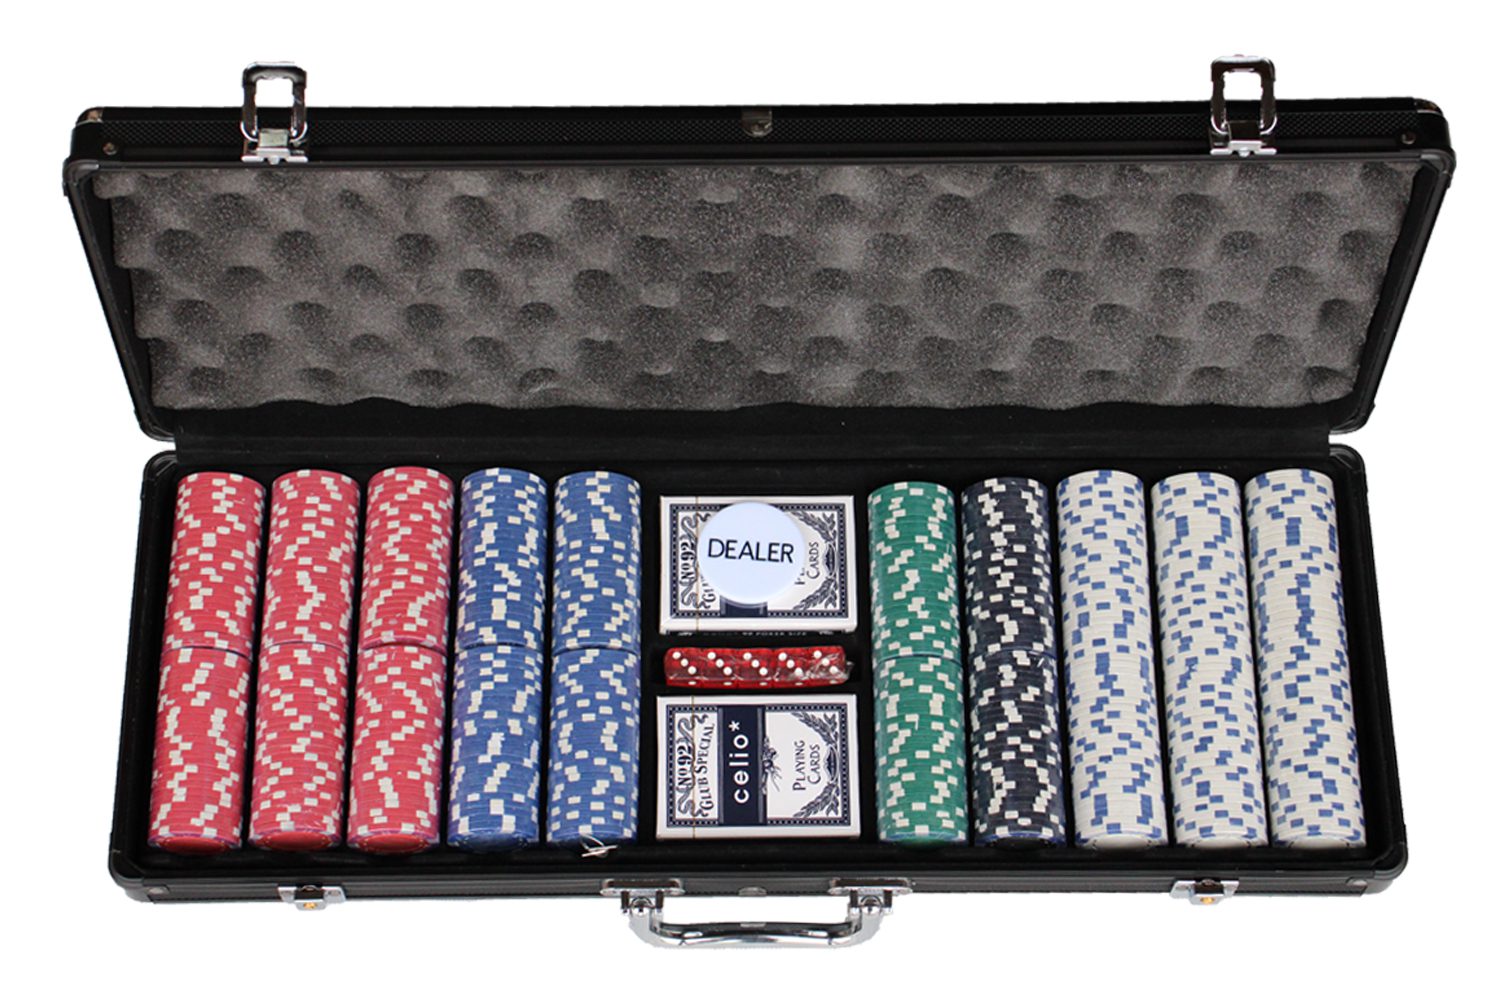 oogst klem Levendig Pokerset aluminium Case 500 chips zwart | Snelle levering